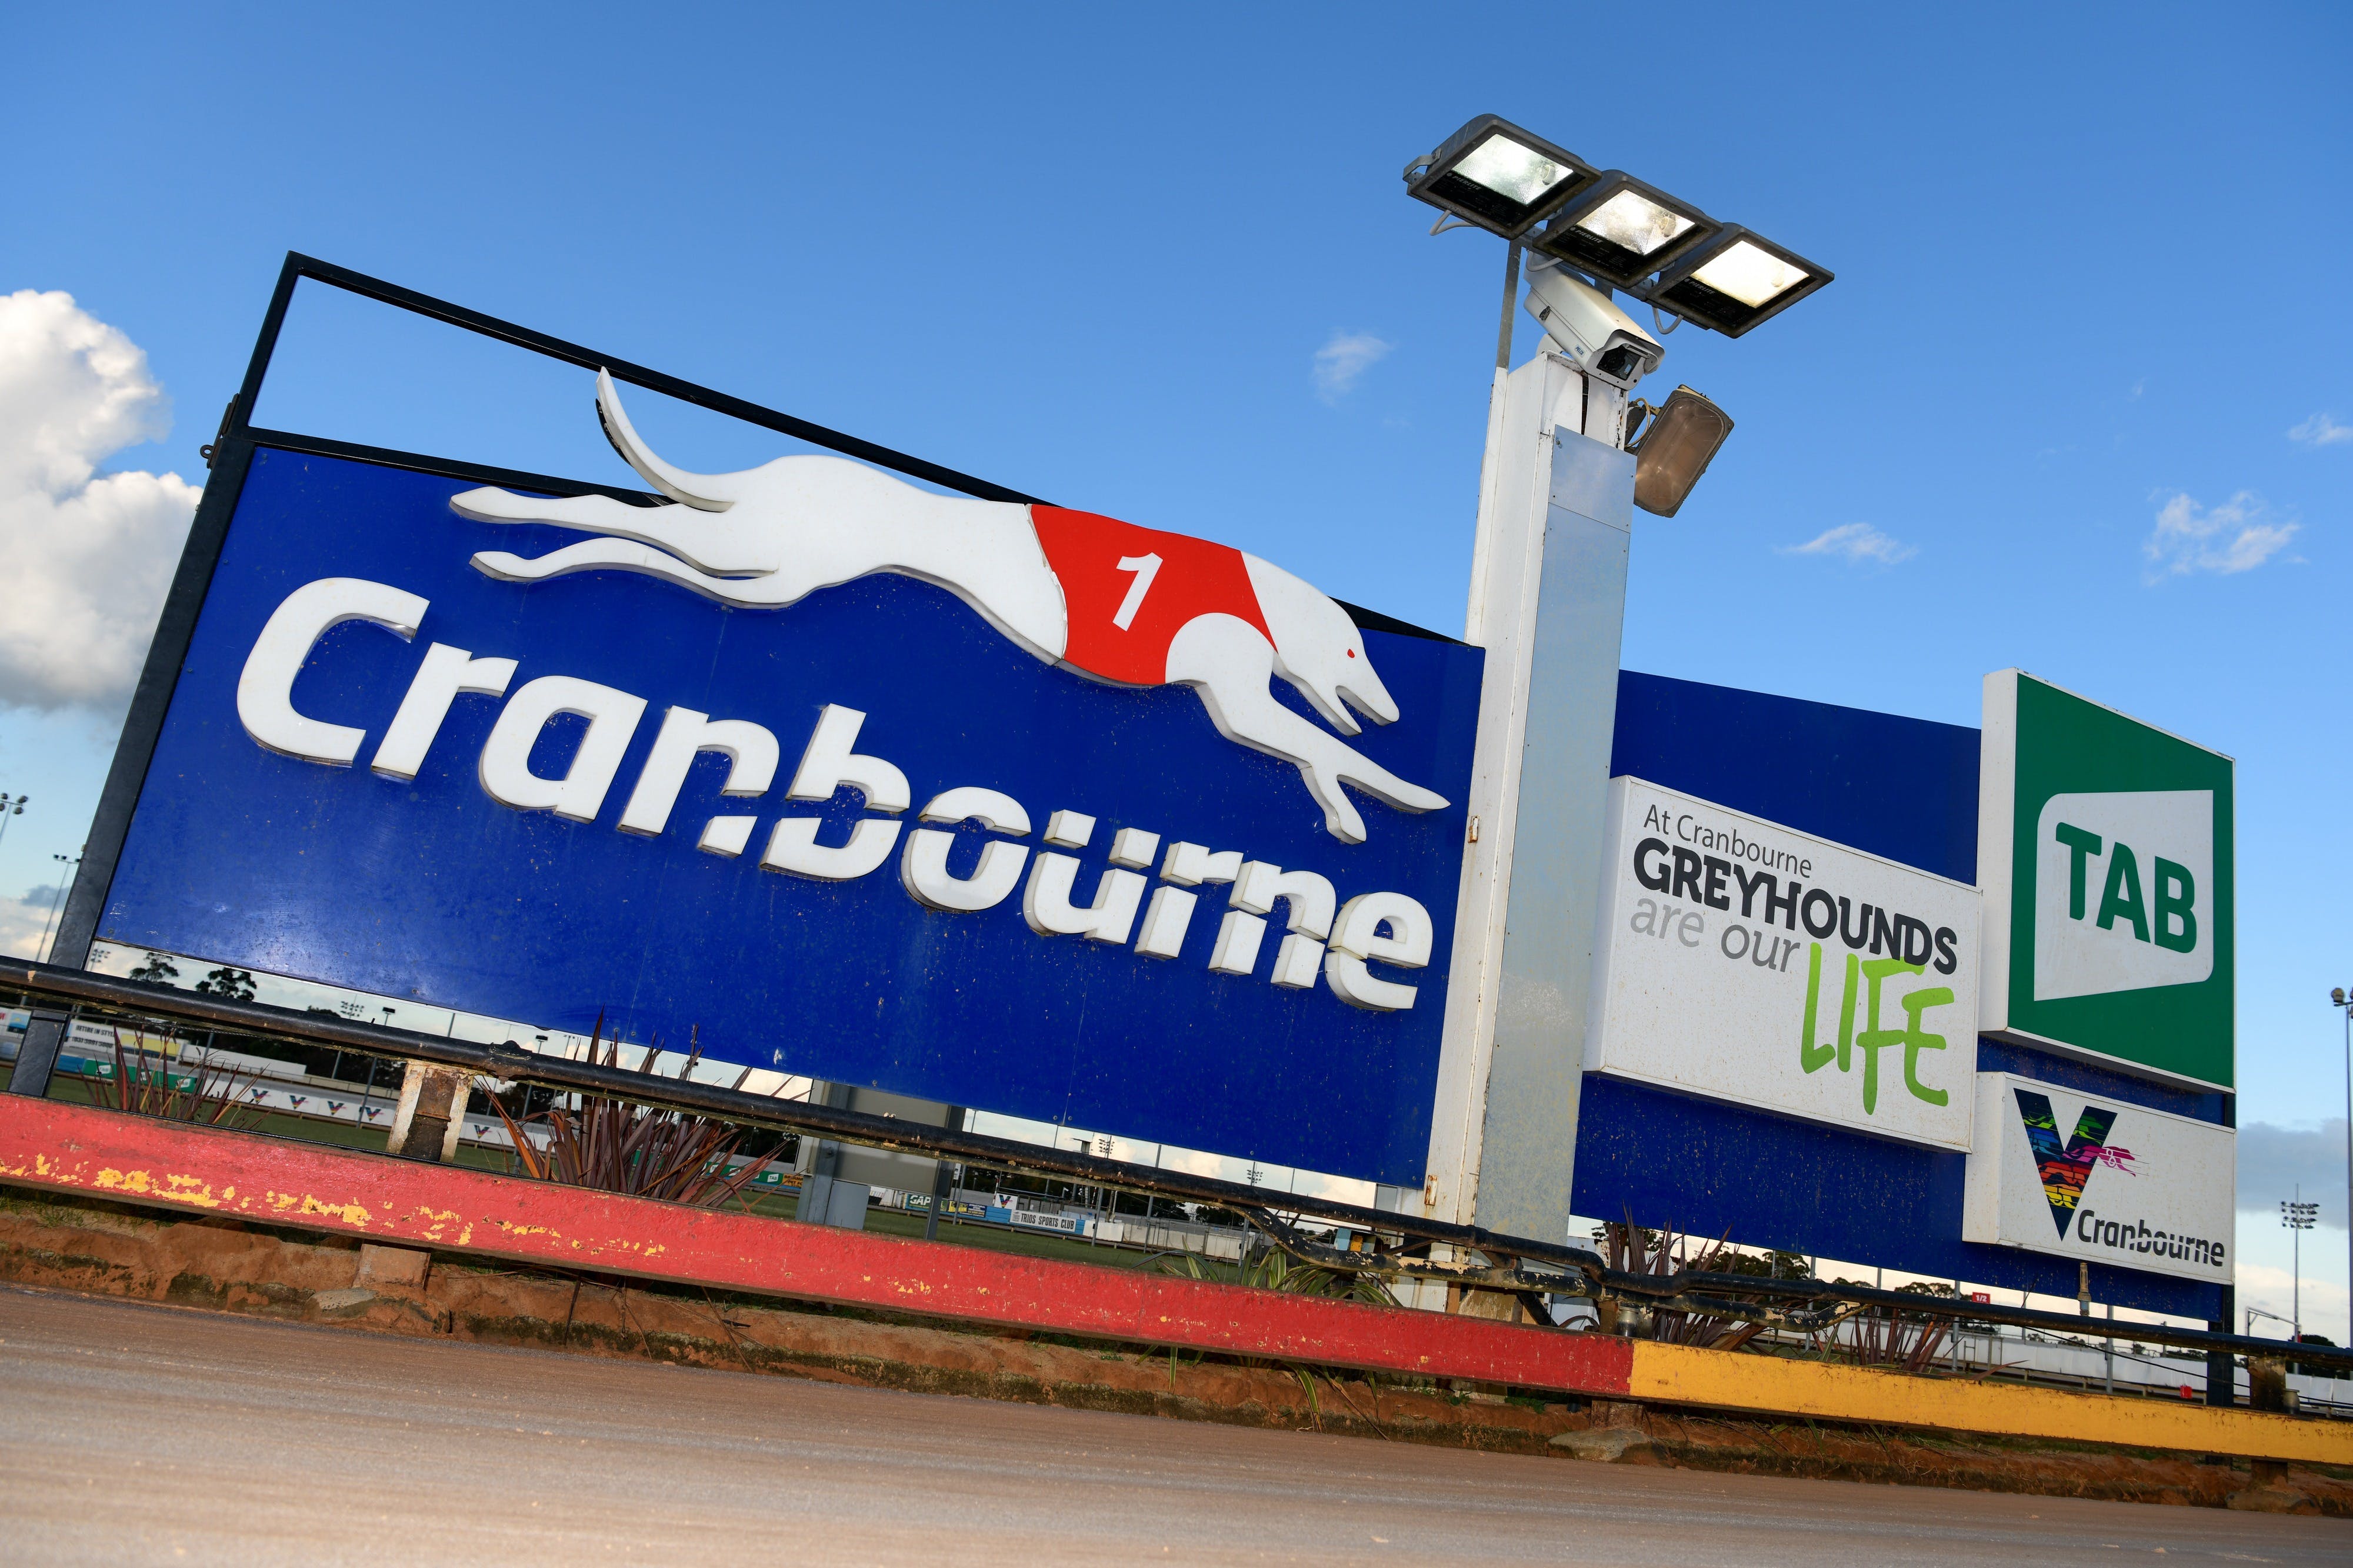 Cranbourne Greyhound Racing Club - Attractions